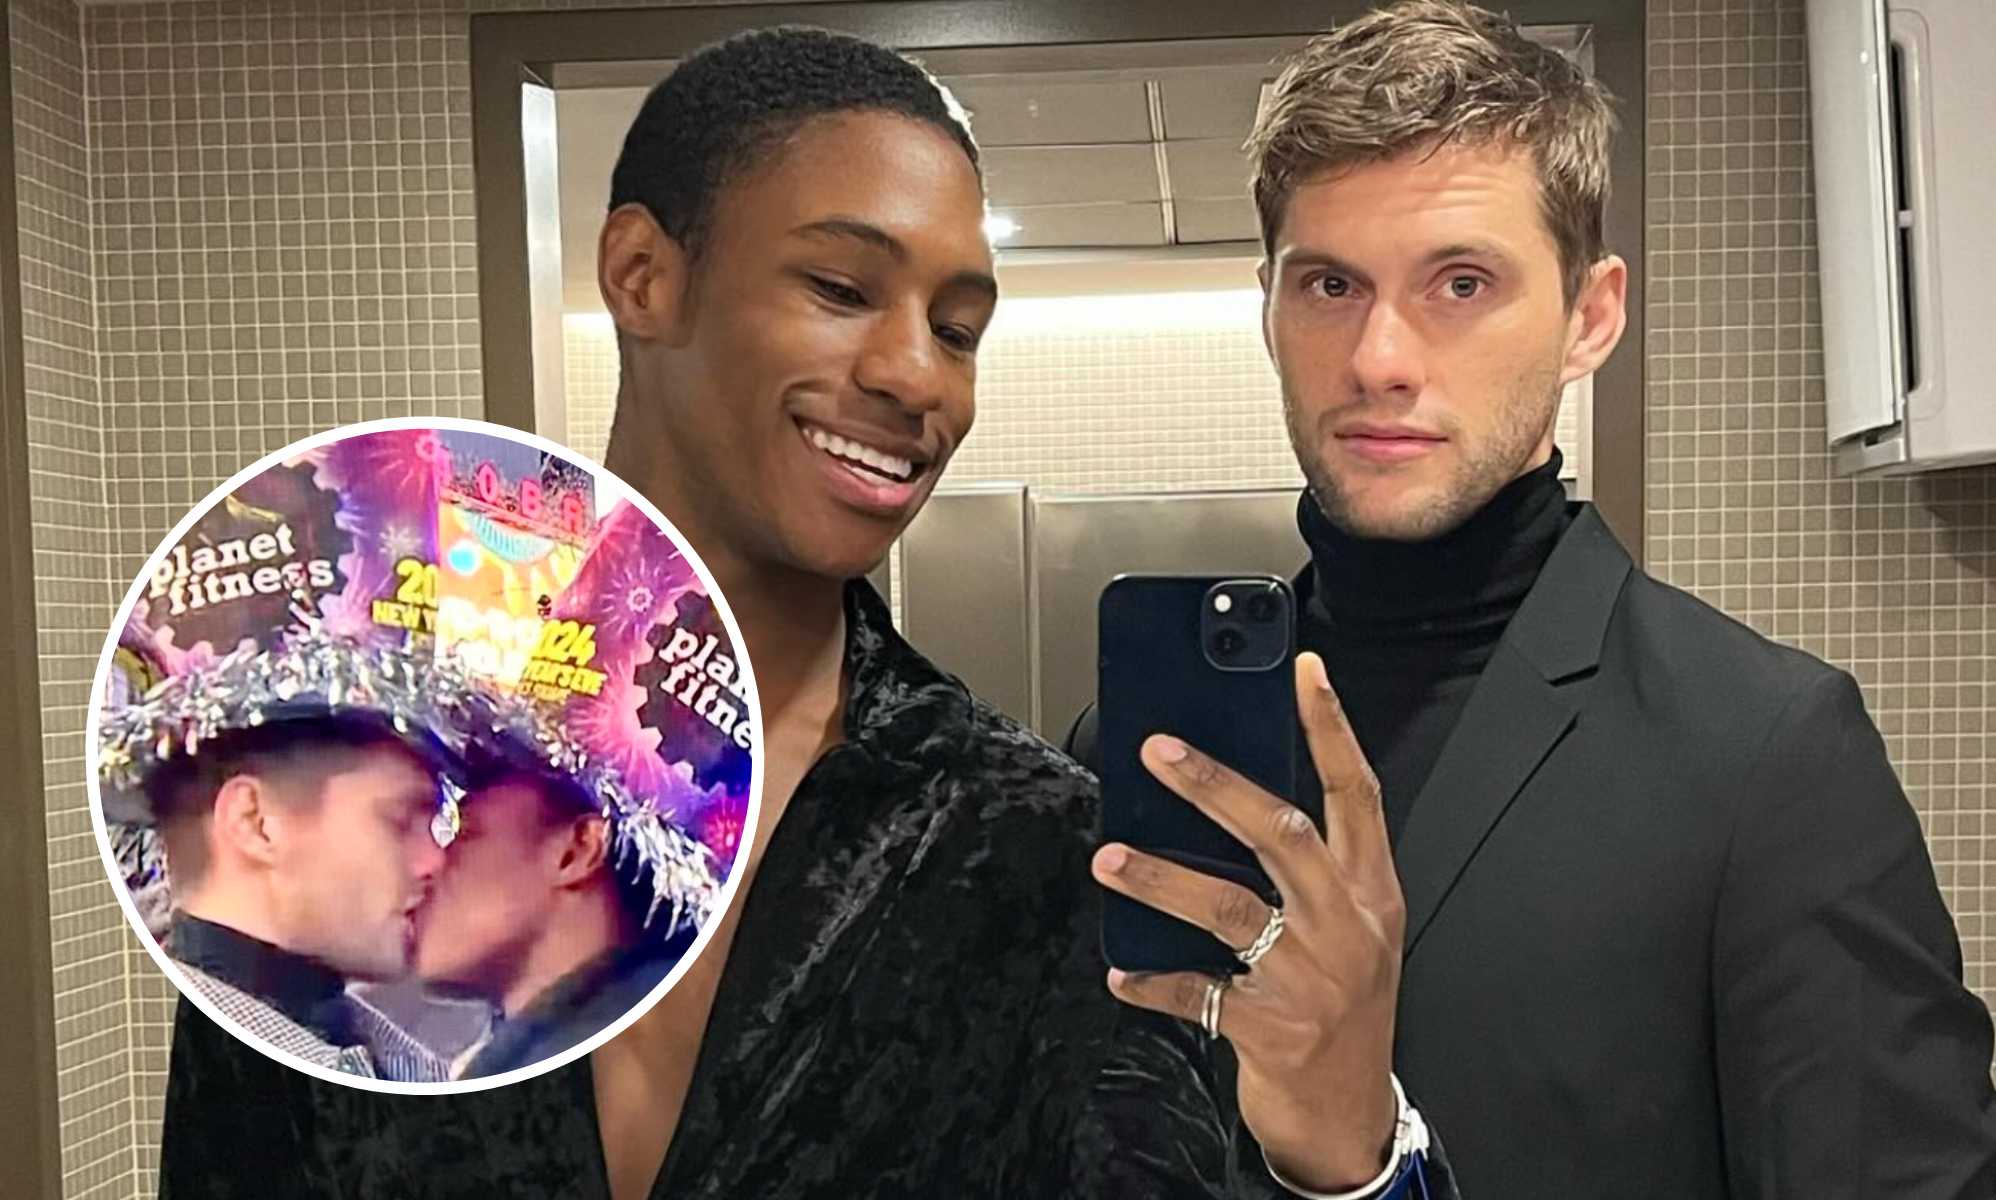 CNN airs interracial gay kiss on New Year's Eve, bigots lose minds